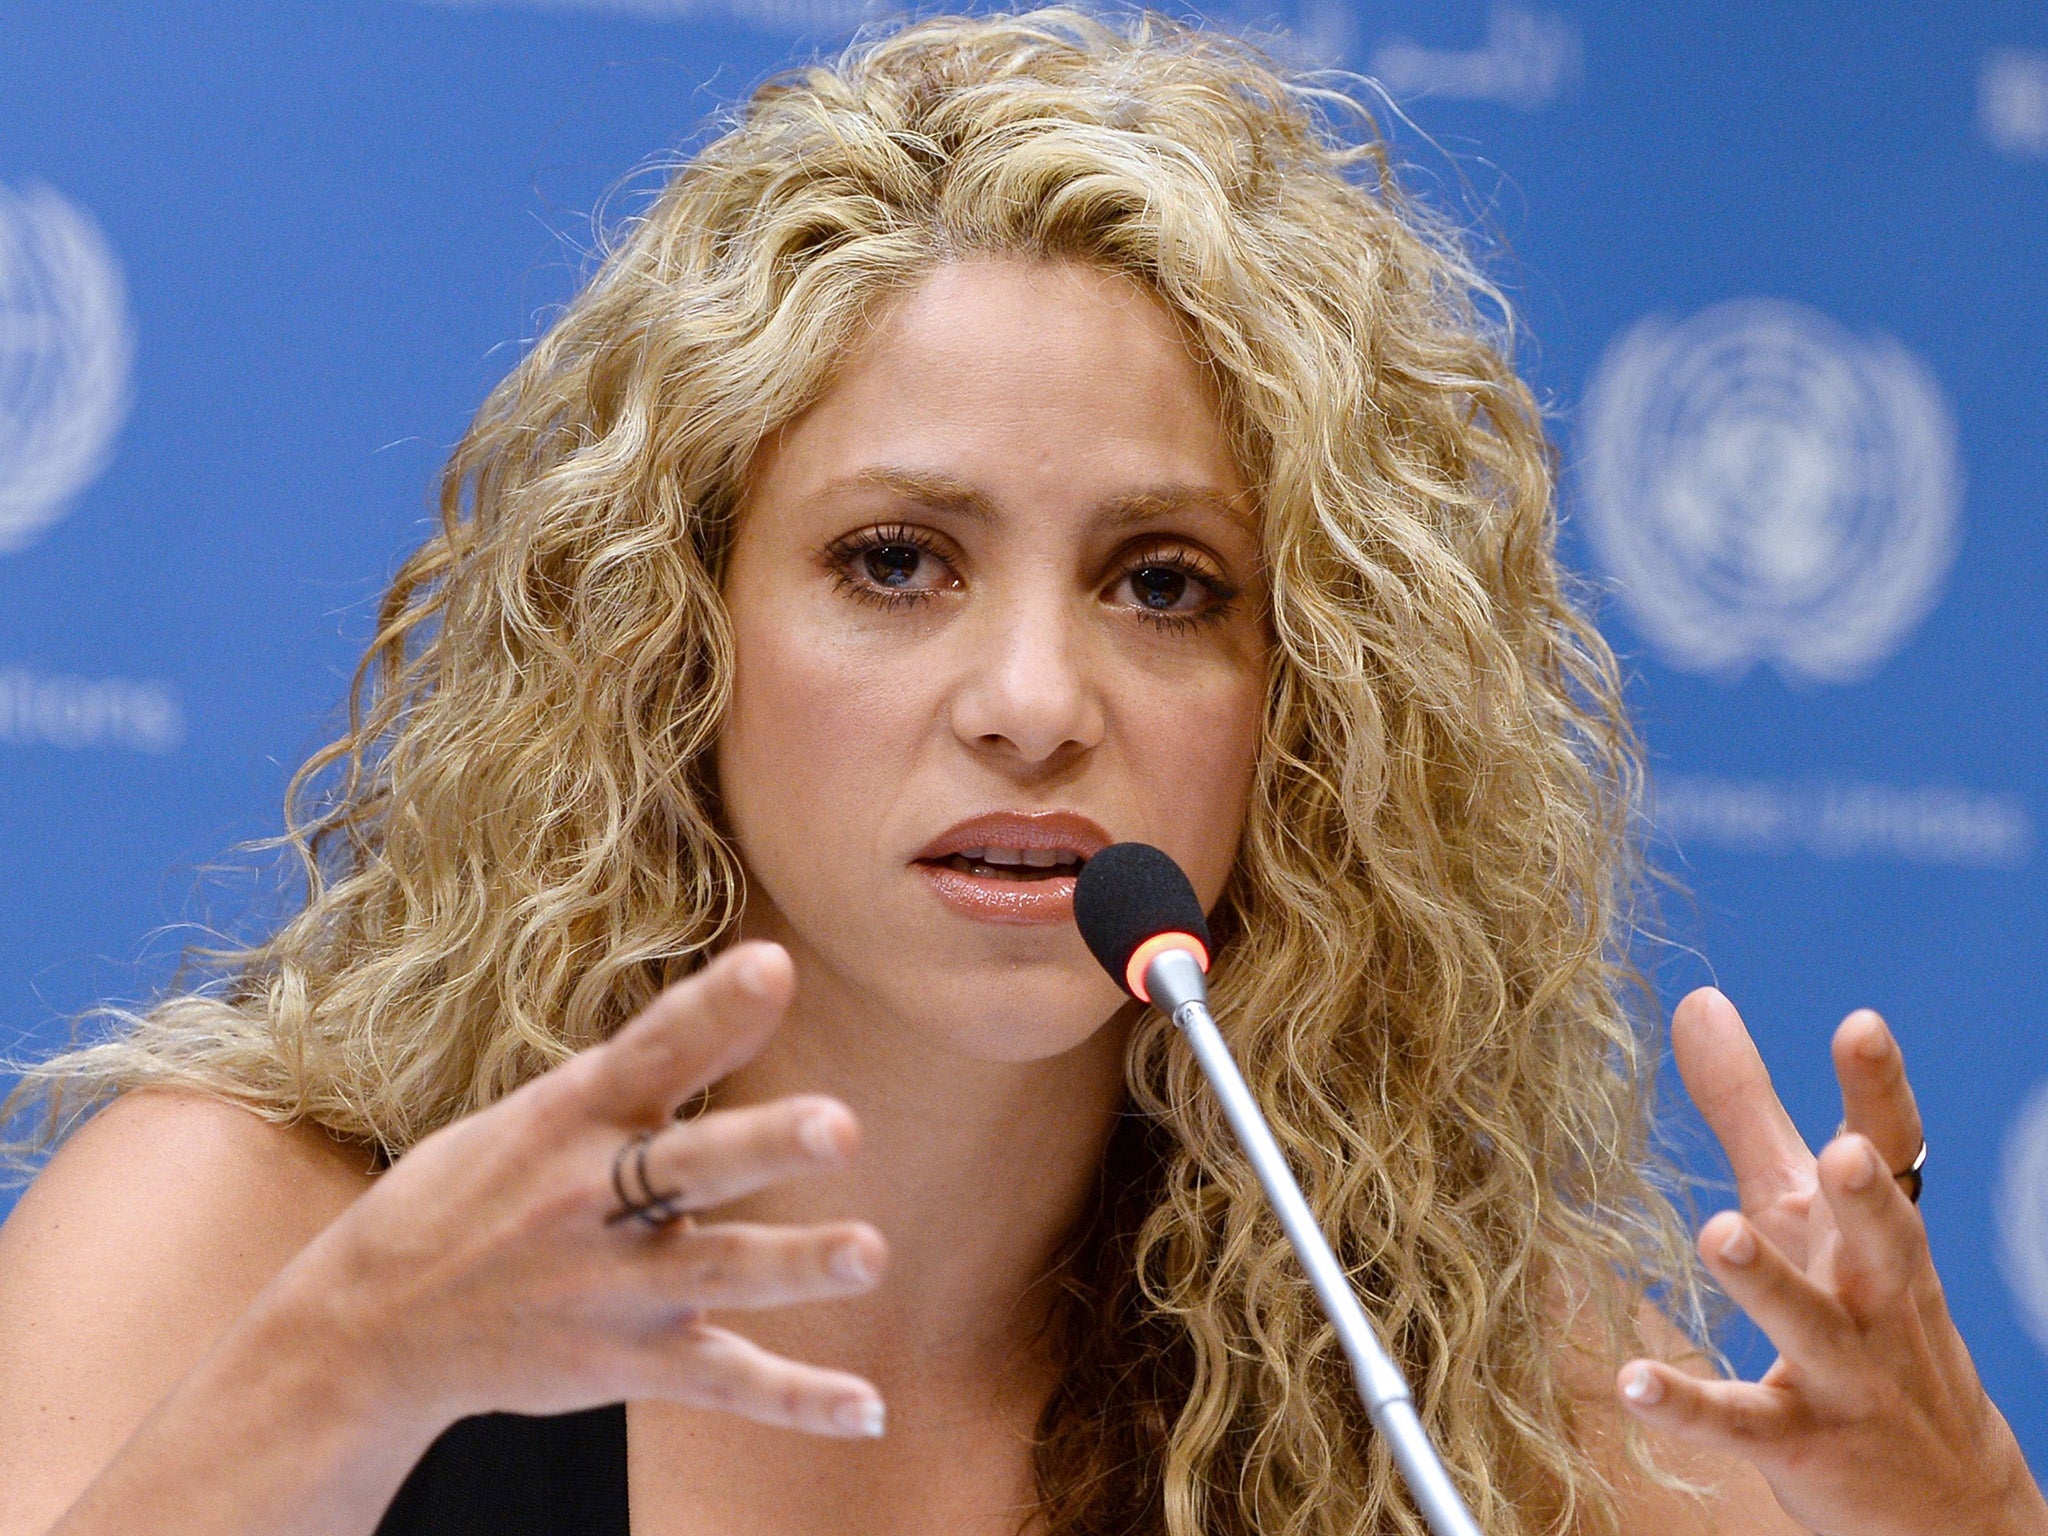 Shakira charged with $7 million tax evasion by Spanish prosecutors